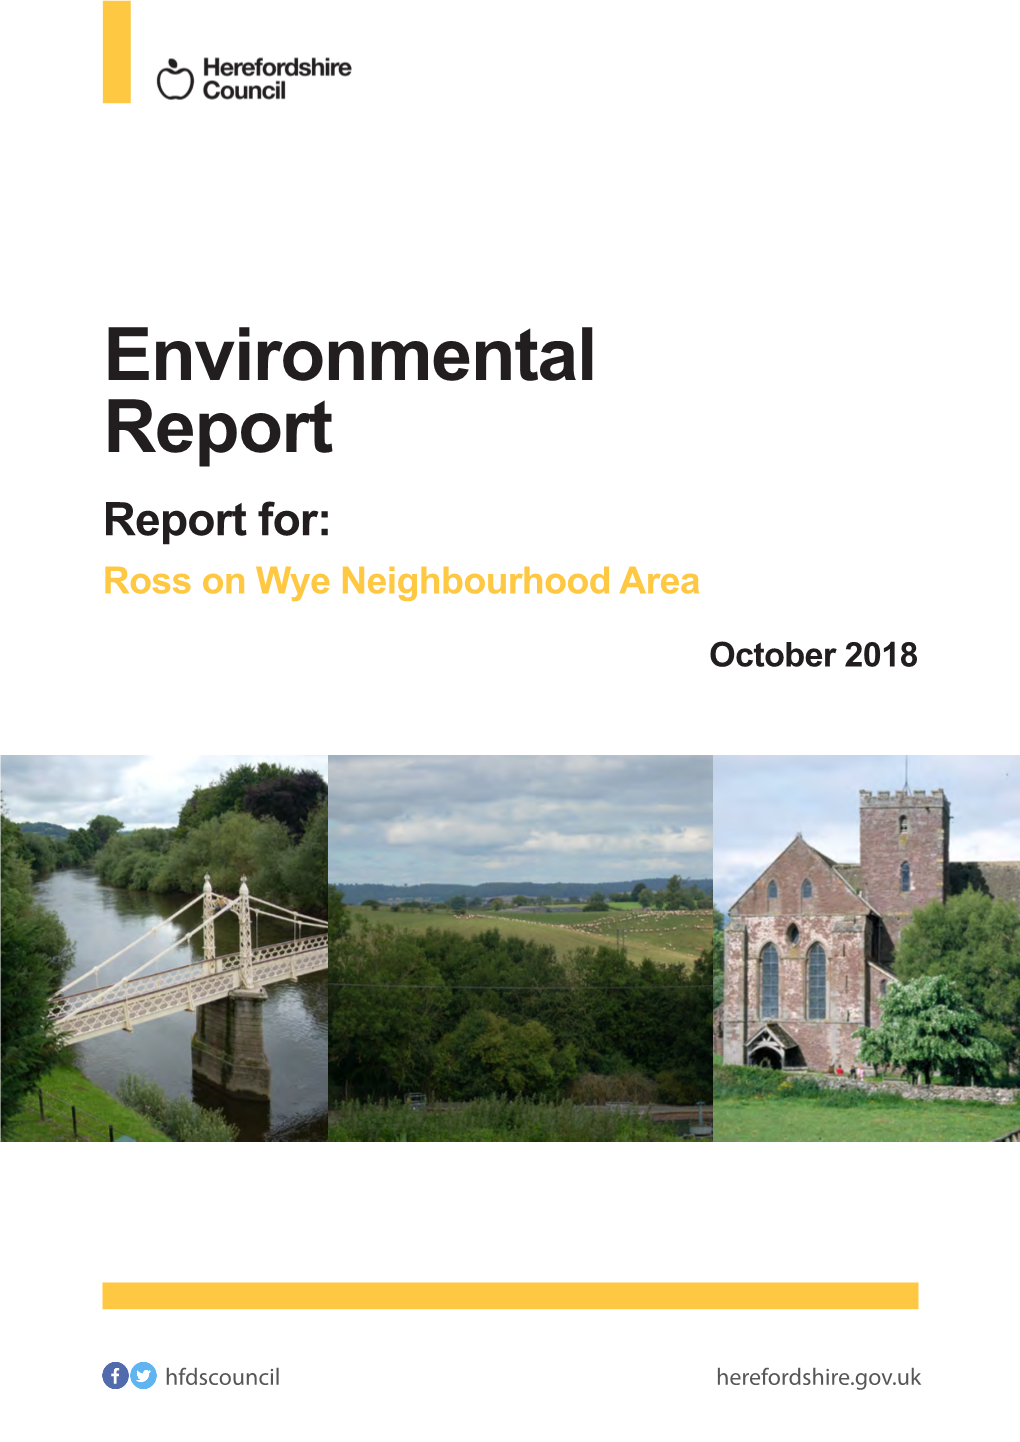 Ross-On-Wye Environmental Report October 2018